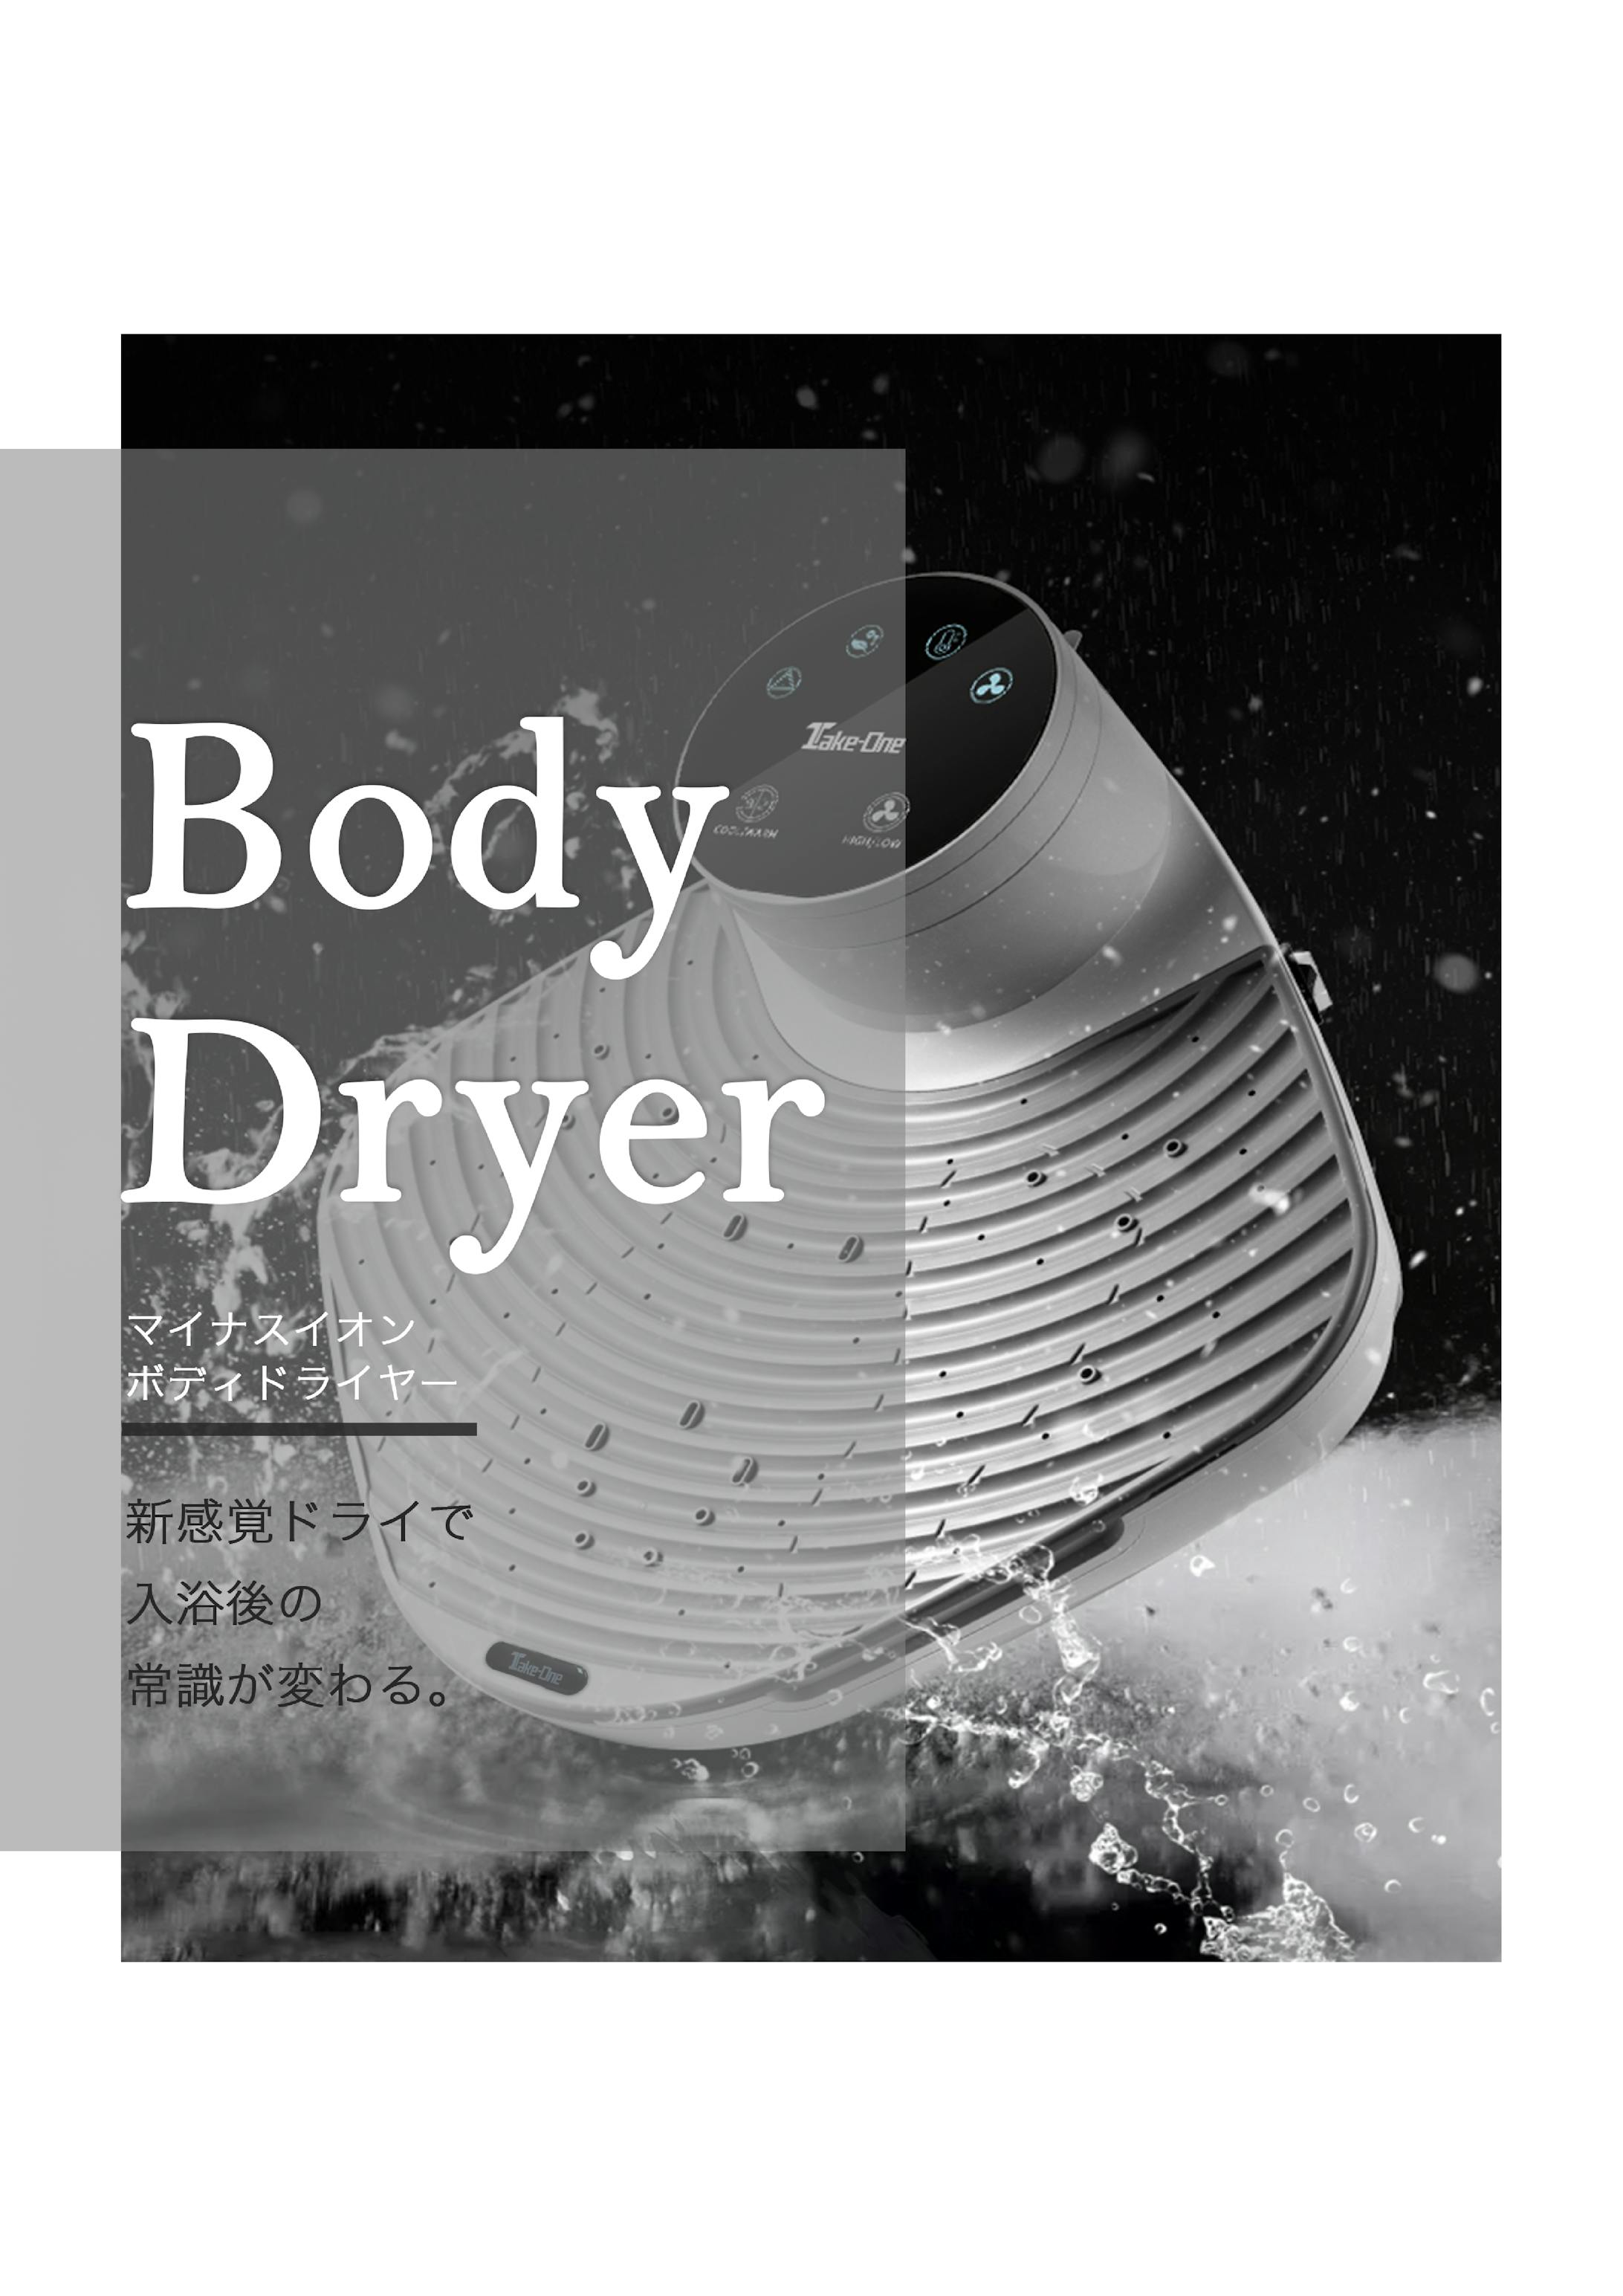 Body Dryer パンフレット-1